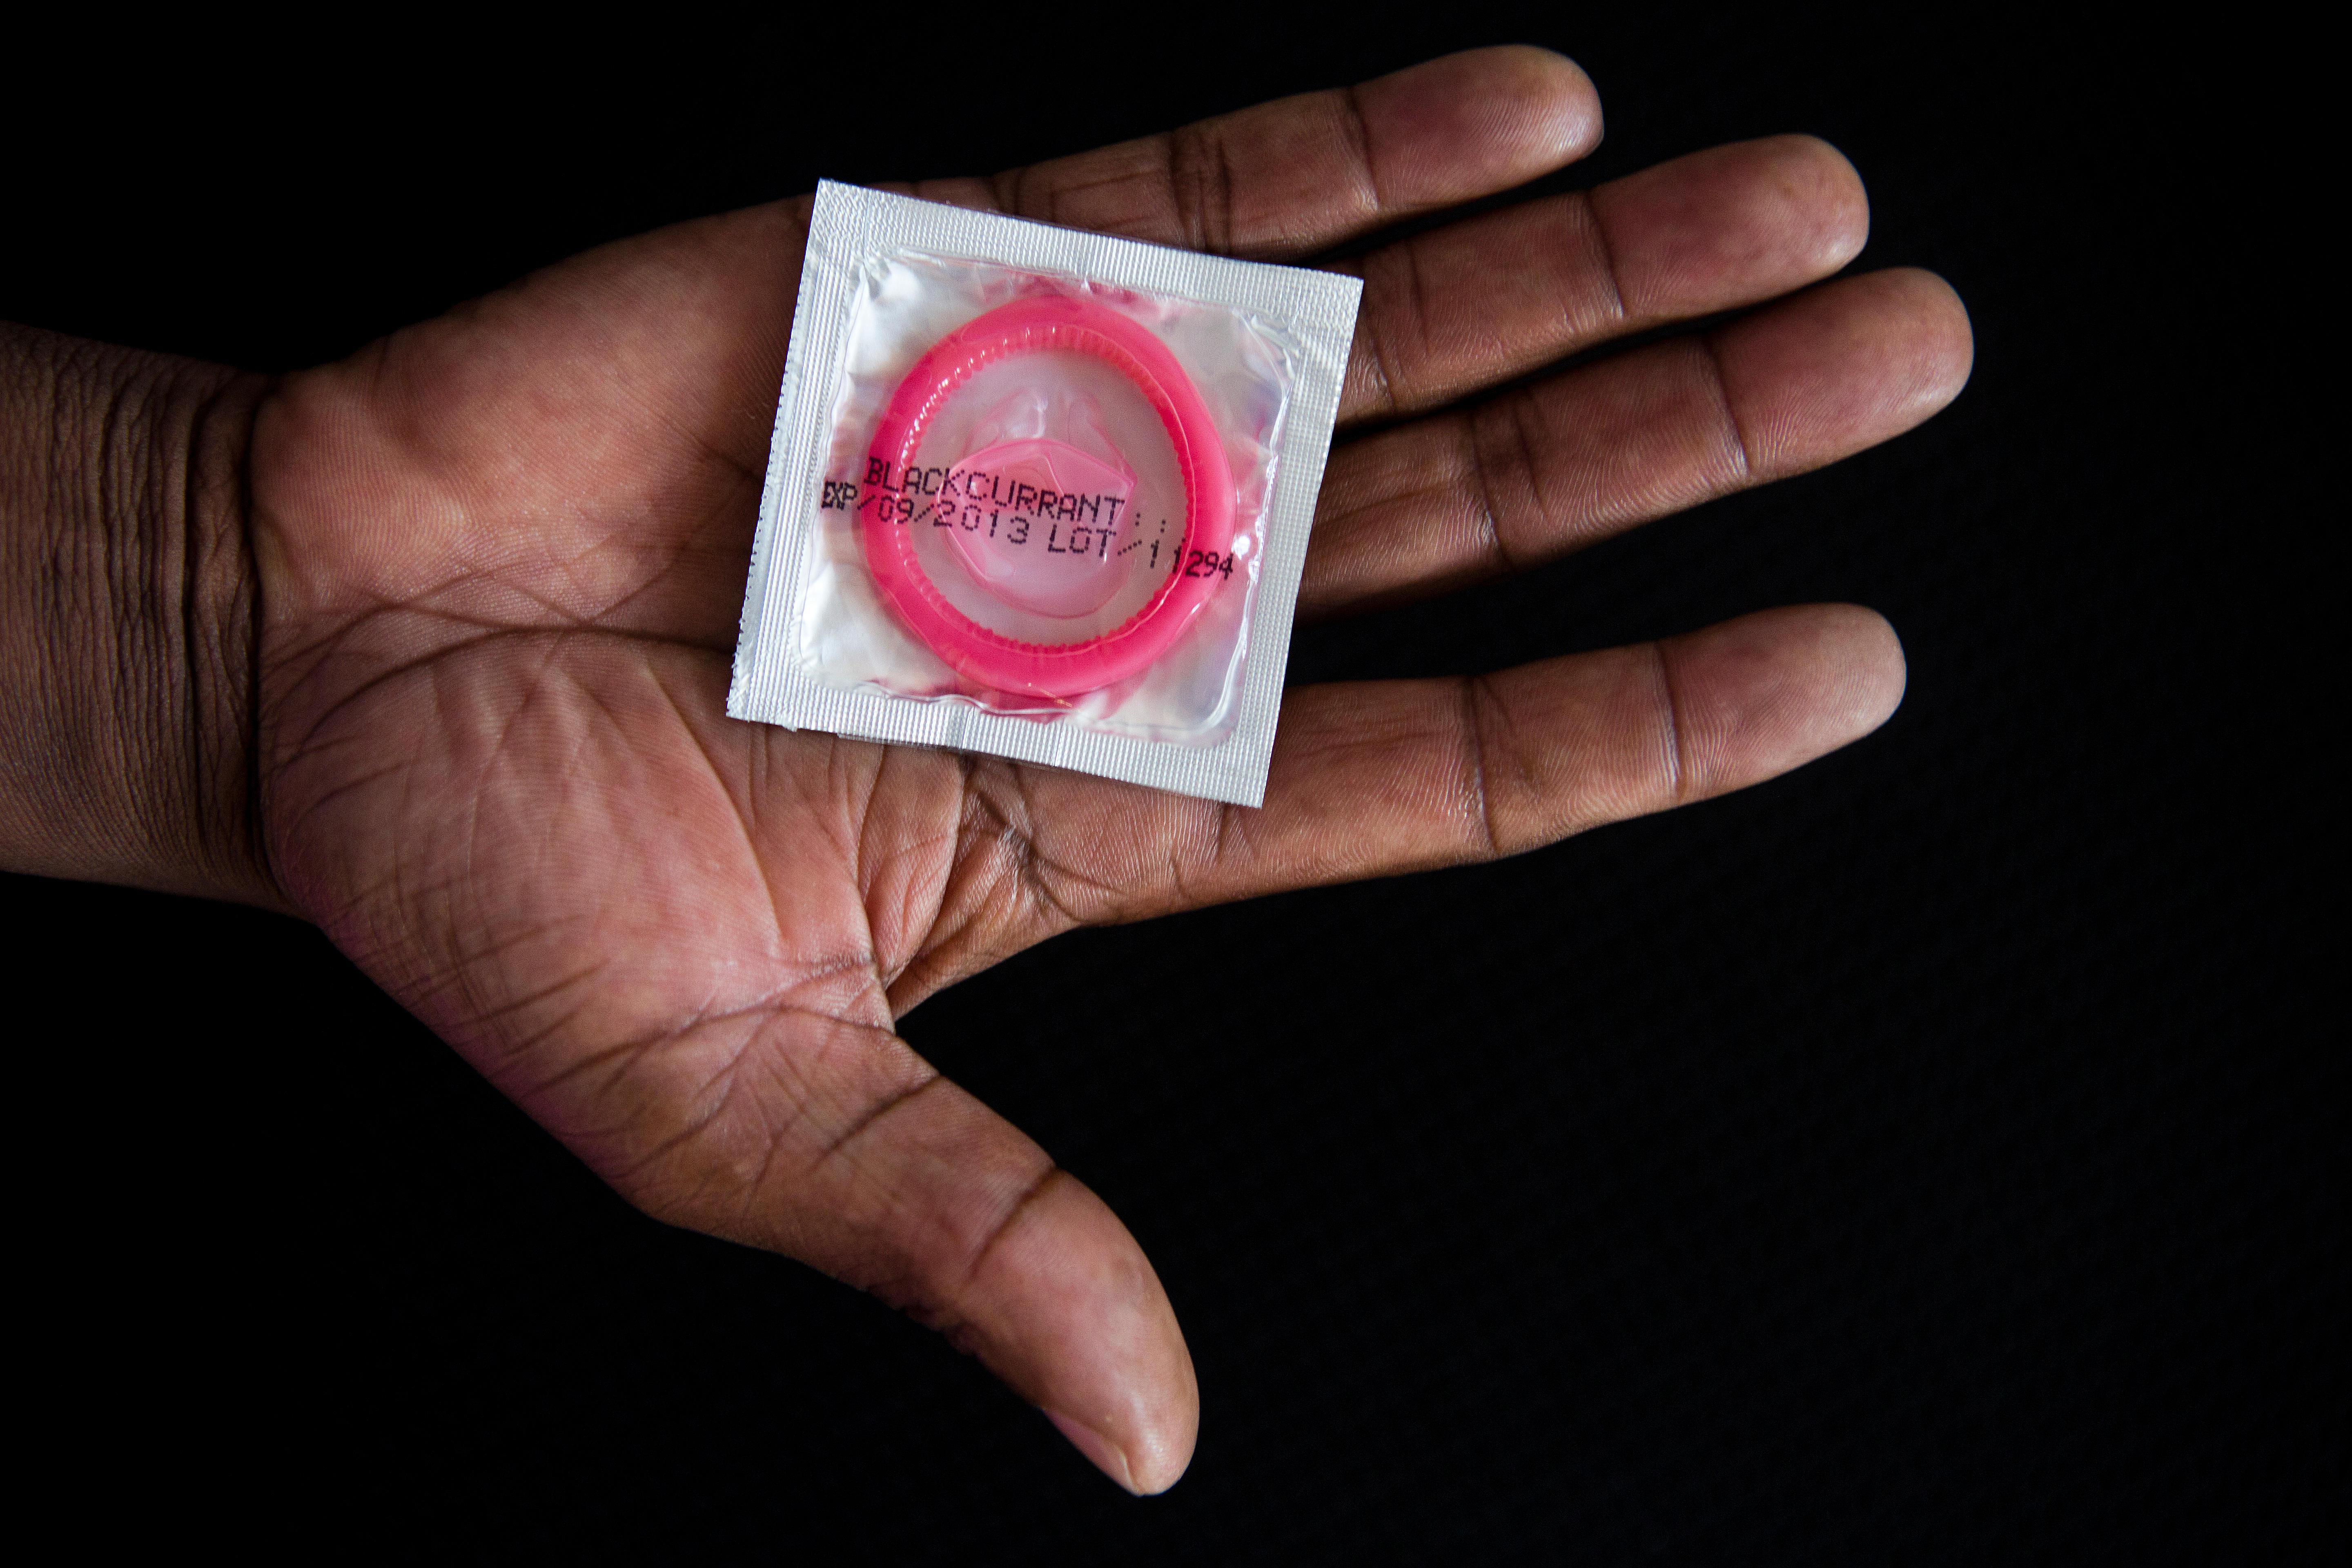 Online condom tesco marketing chaos